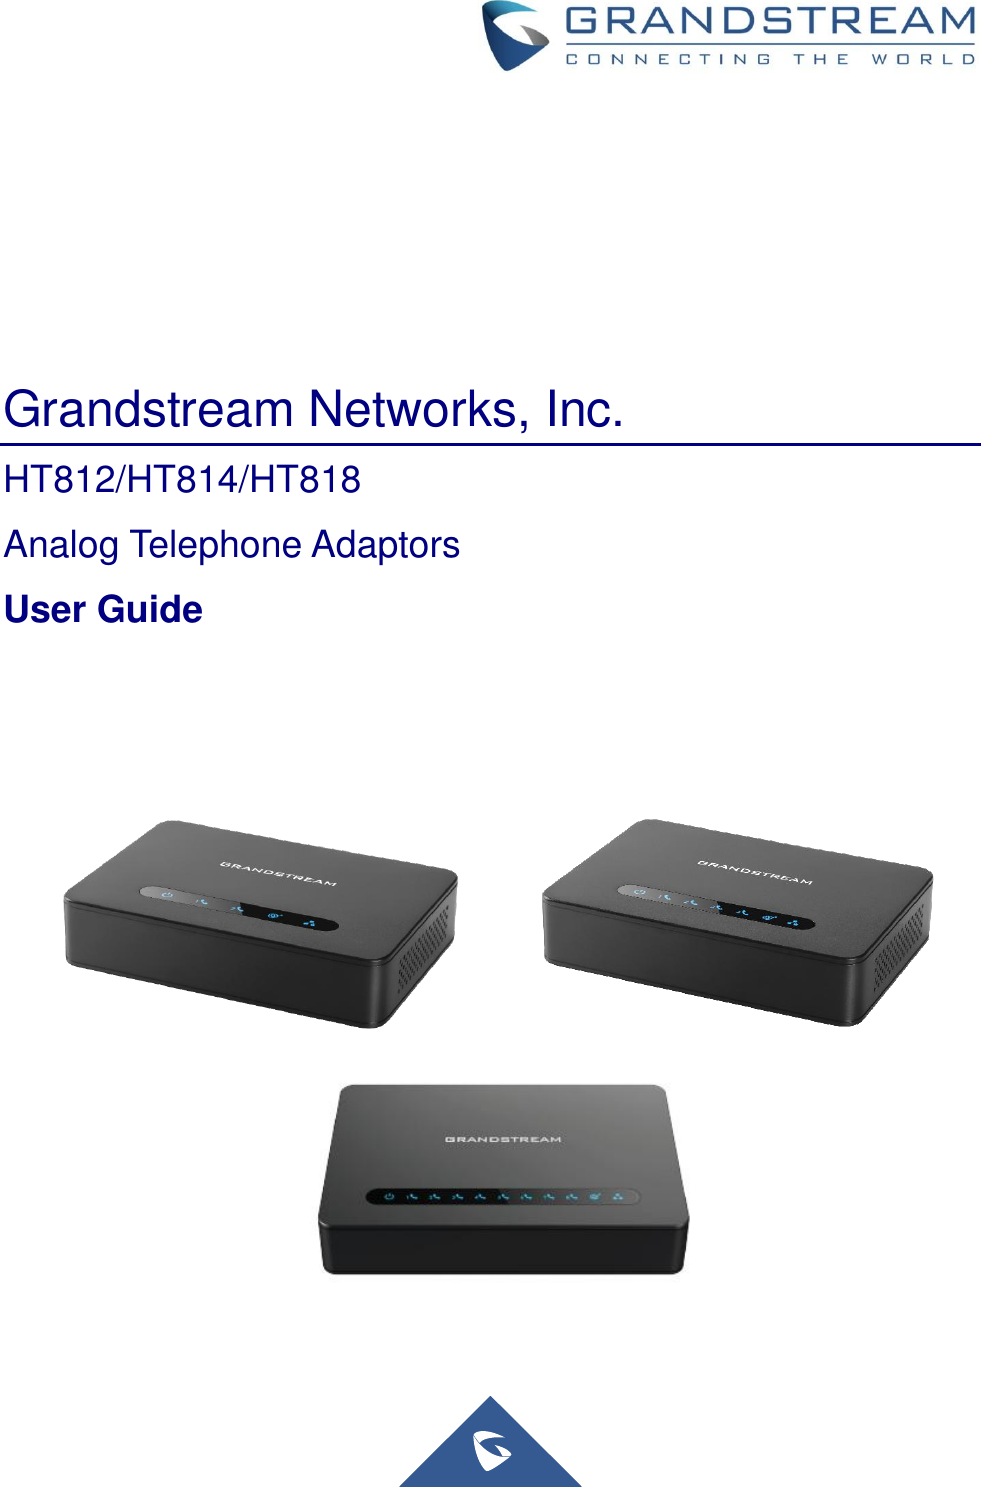                    Grandstream Networks, Inc. HT812/HT814/HT818 Analog Telephone Adaptors User Guide   